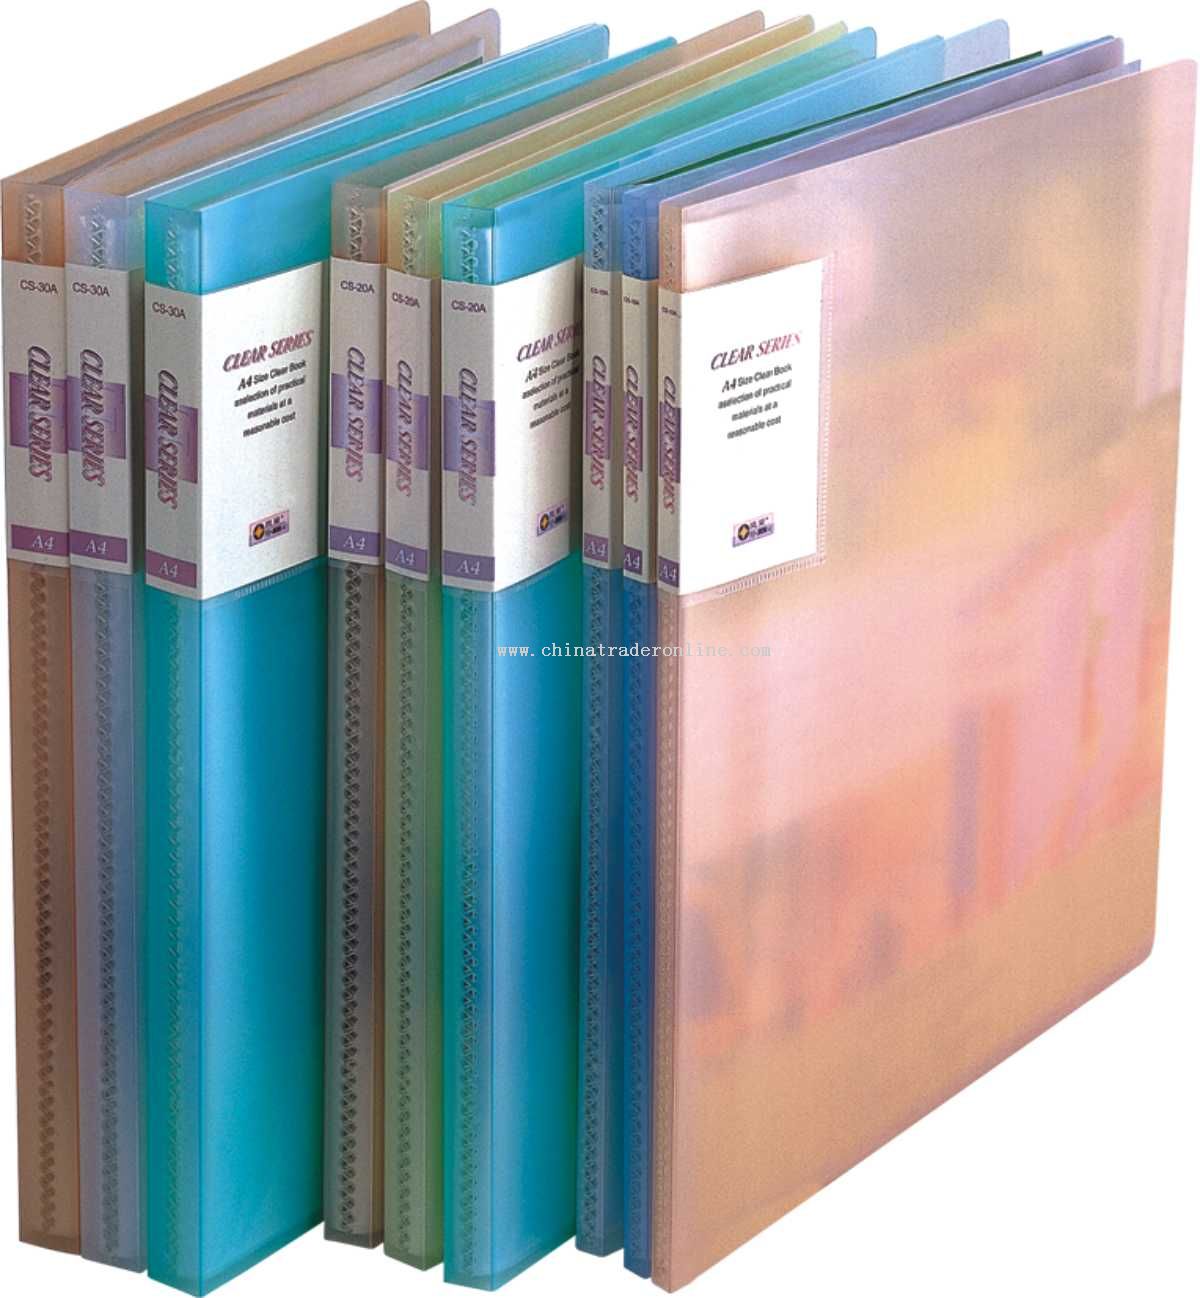 Clear display book (10-30 inner bag)